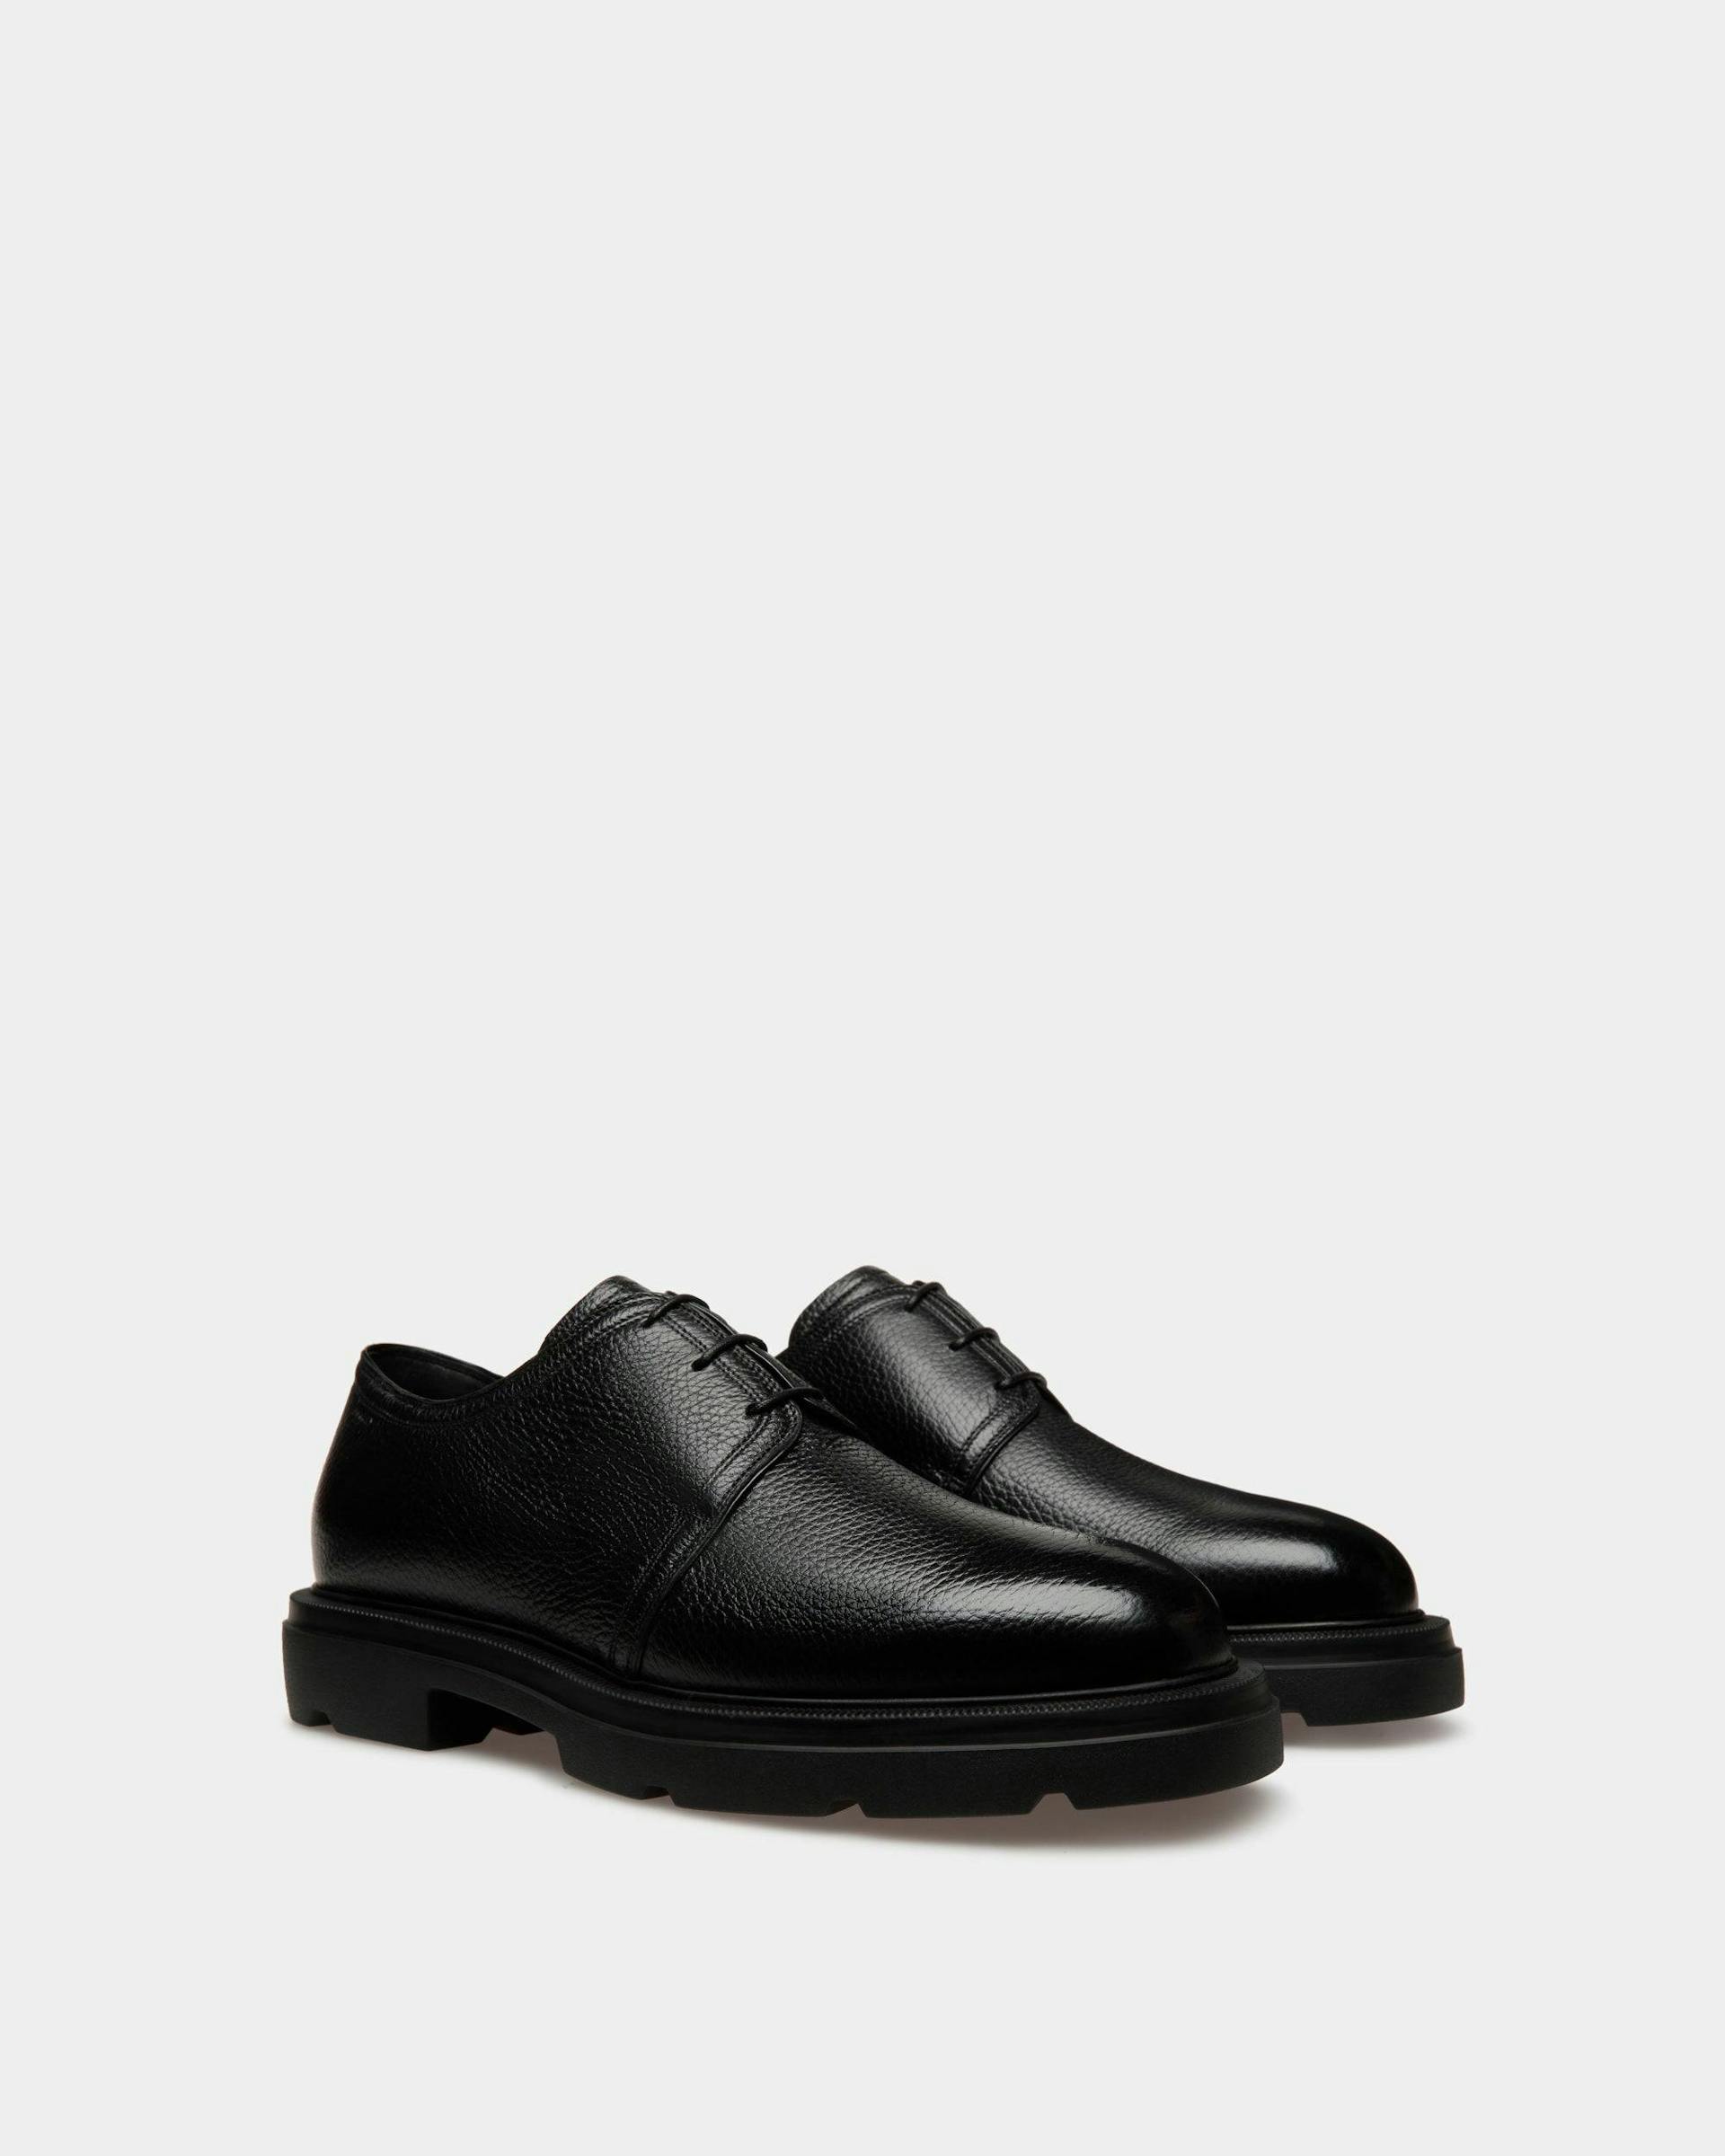 Zurich Derby Shoes In Black Leather - Men's - Bally - 02